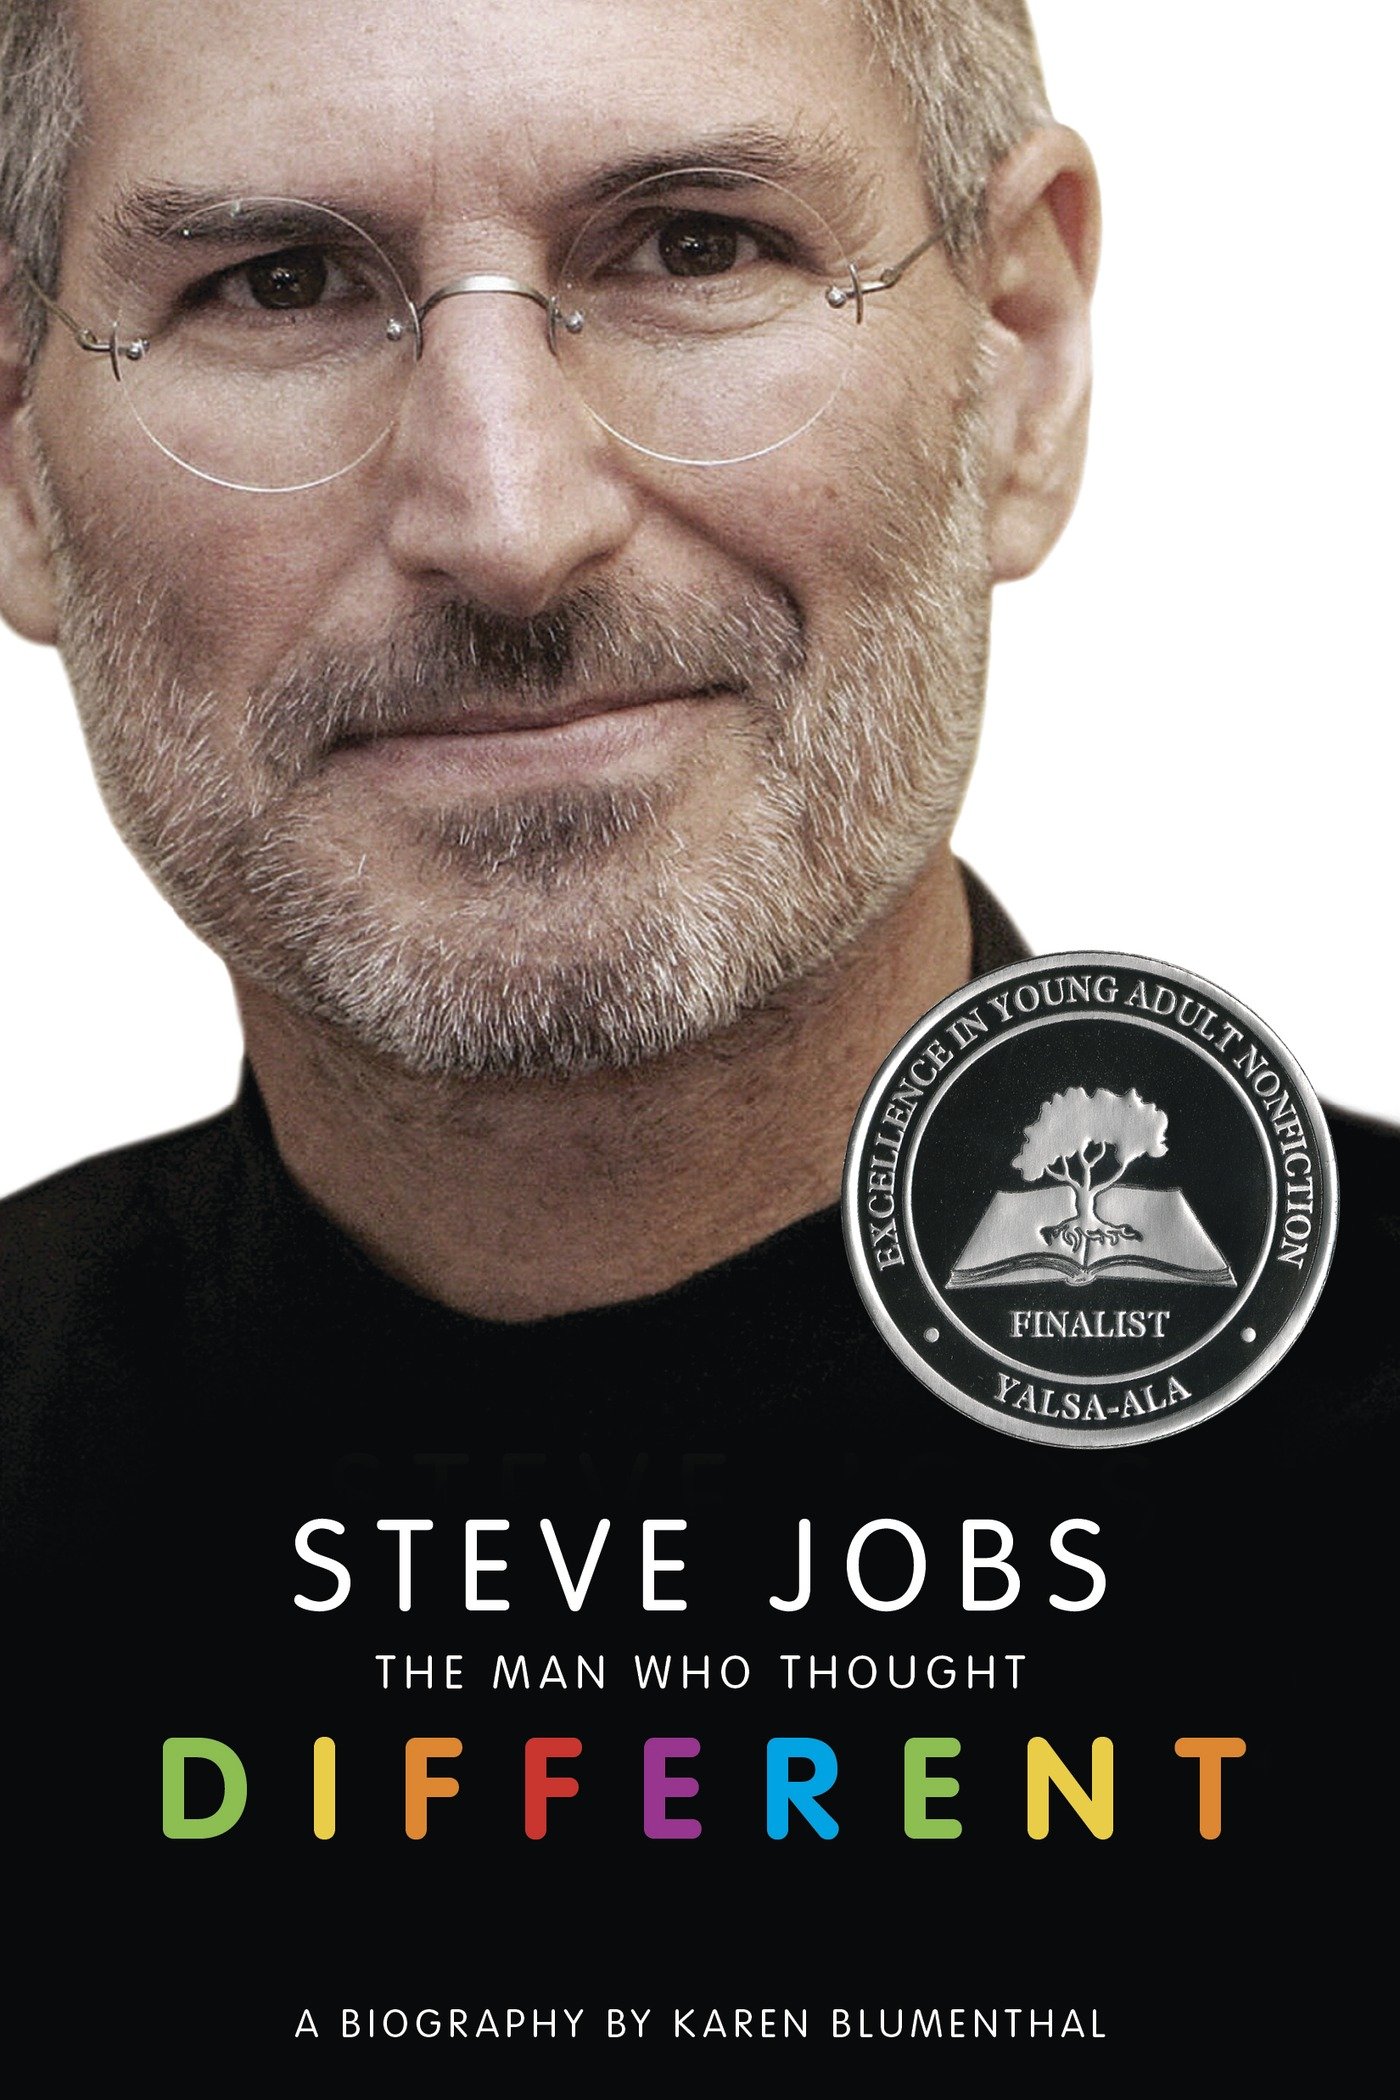 Steve Jobs Biography Pdf Free In Gujarati Language